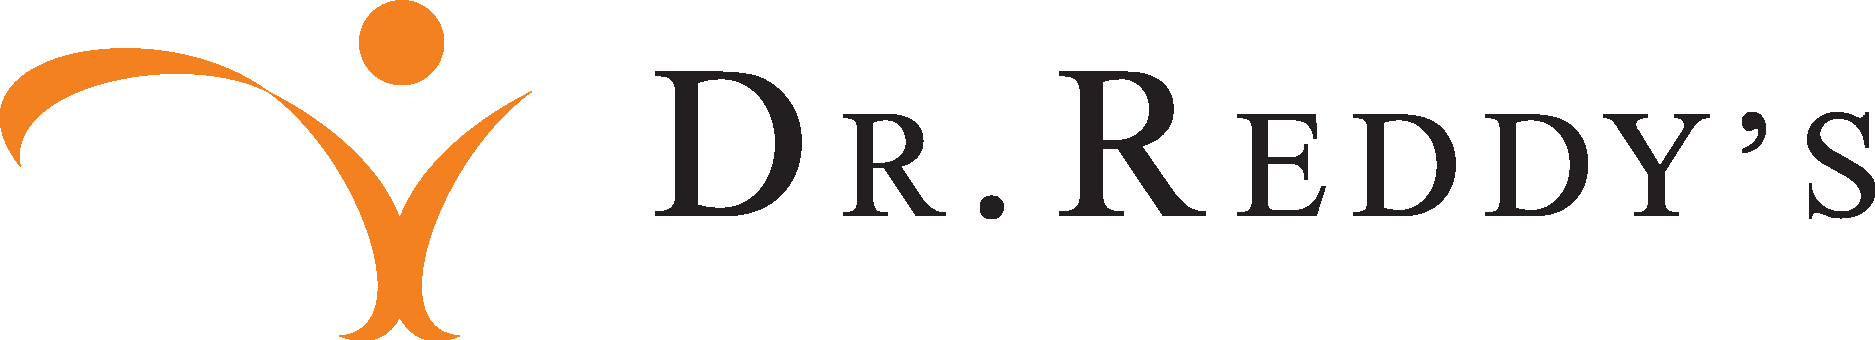 Др реддис. Доктор Реддис логотип. Компания Dr. Reddy’s Laboratories. Dr. Reddy,s логотип. Dr. Reddy`s Laboratories Ltd.(Индия).